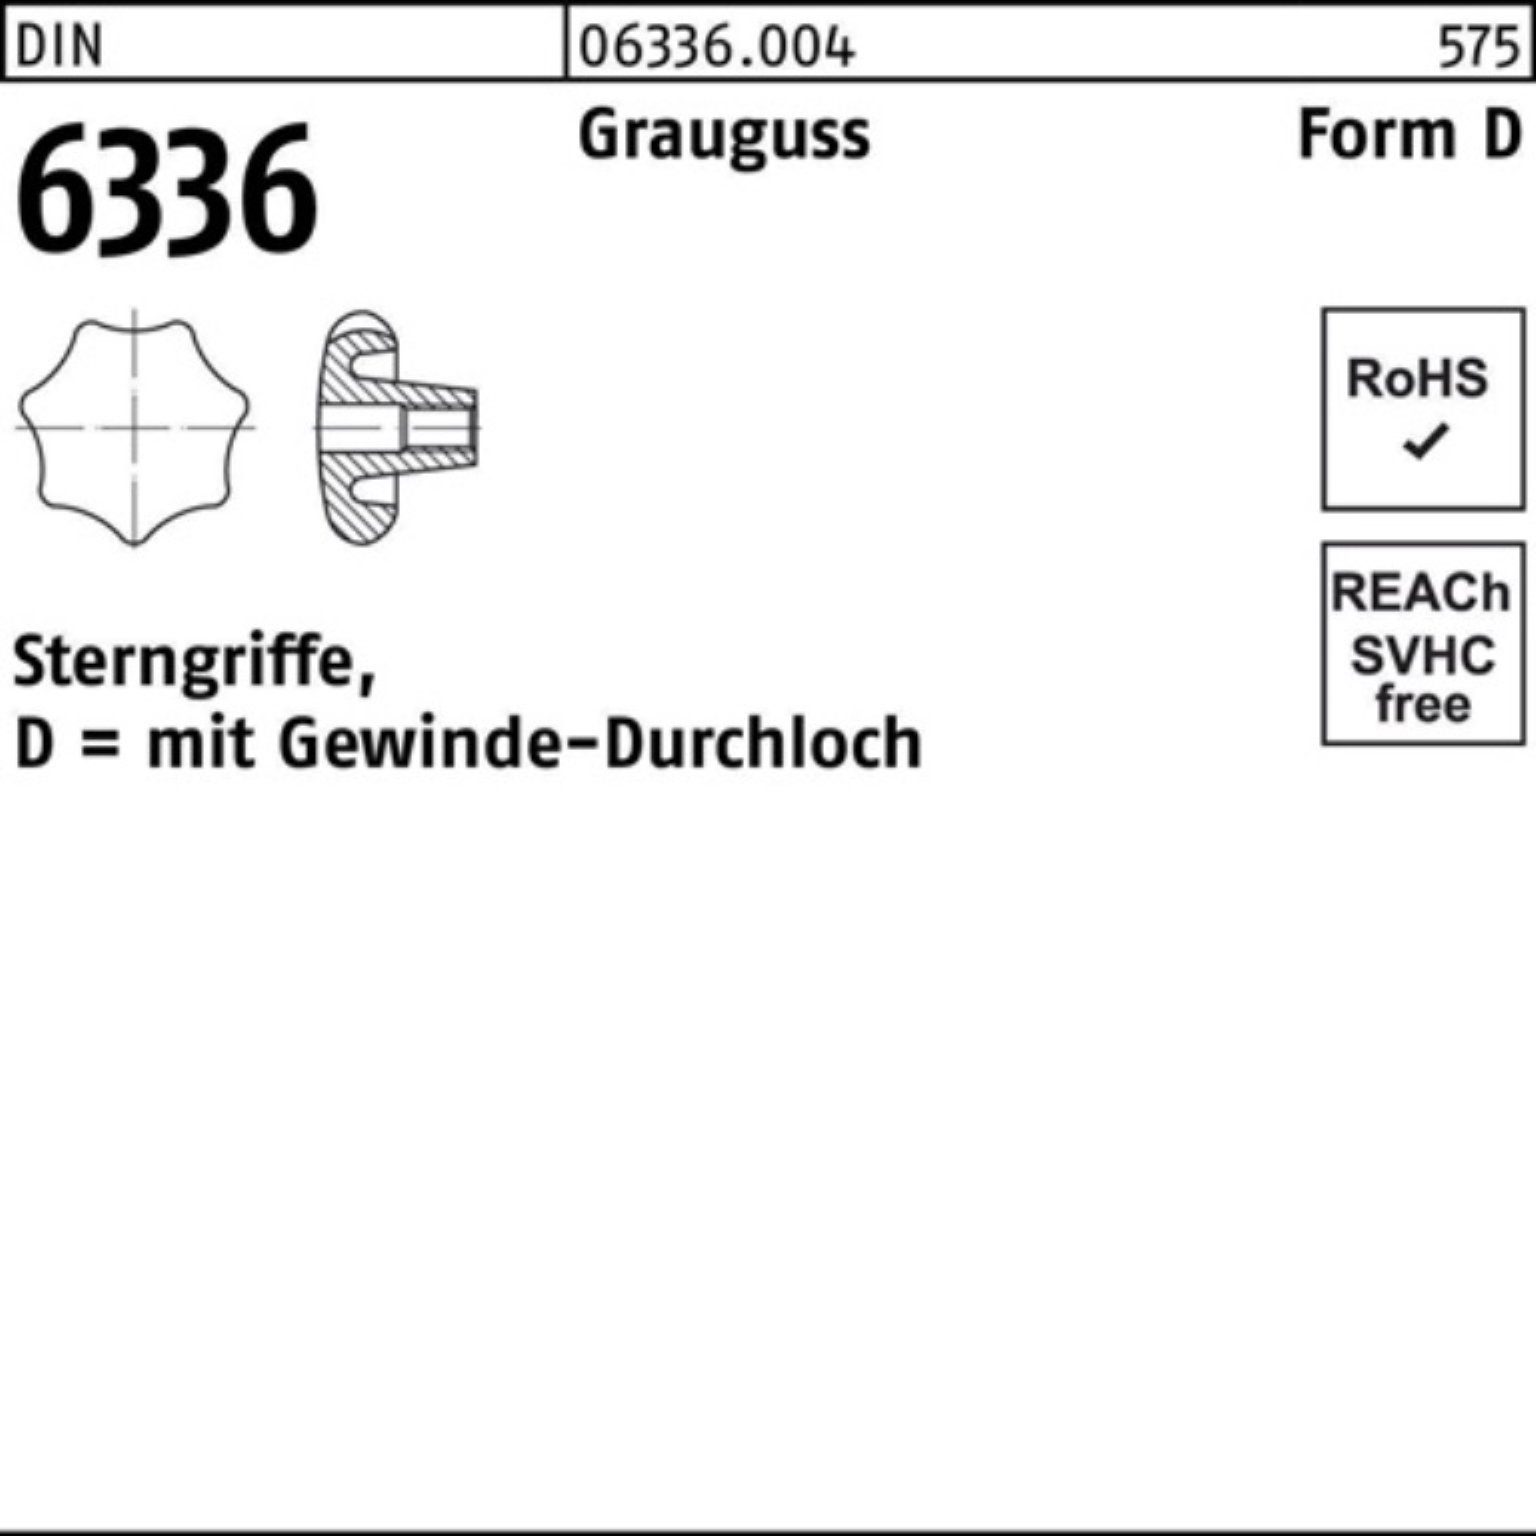 Reyher Griff Stück Sterngriff 5 63 80 6336 FormD Pack M16 DIN 100er DIN D Grauguss